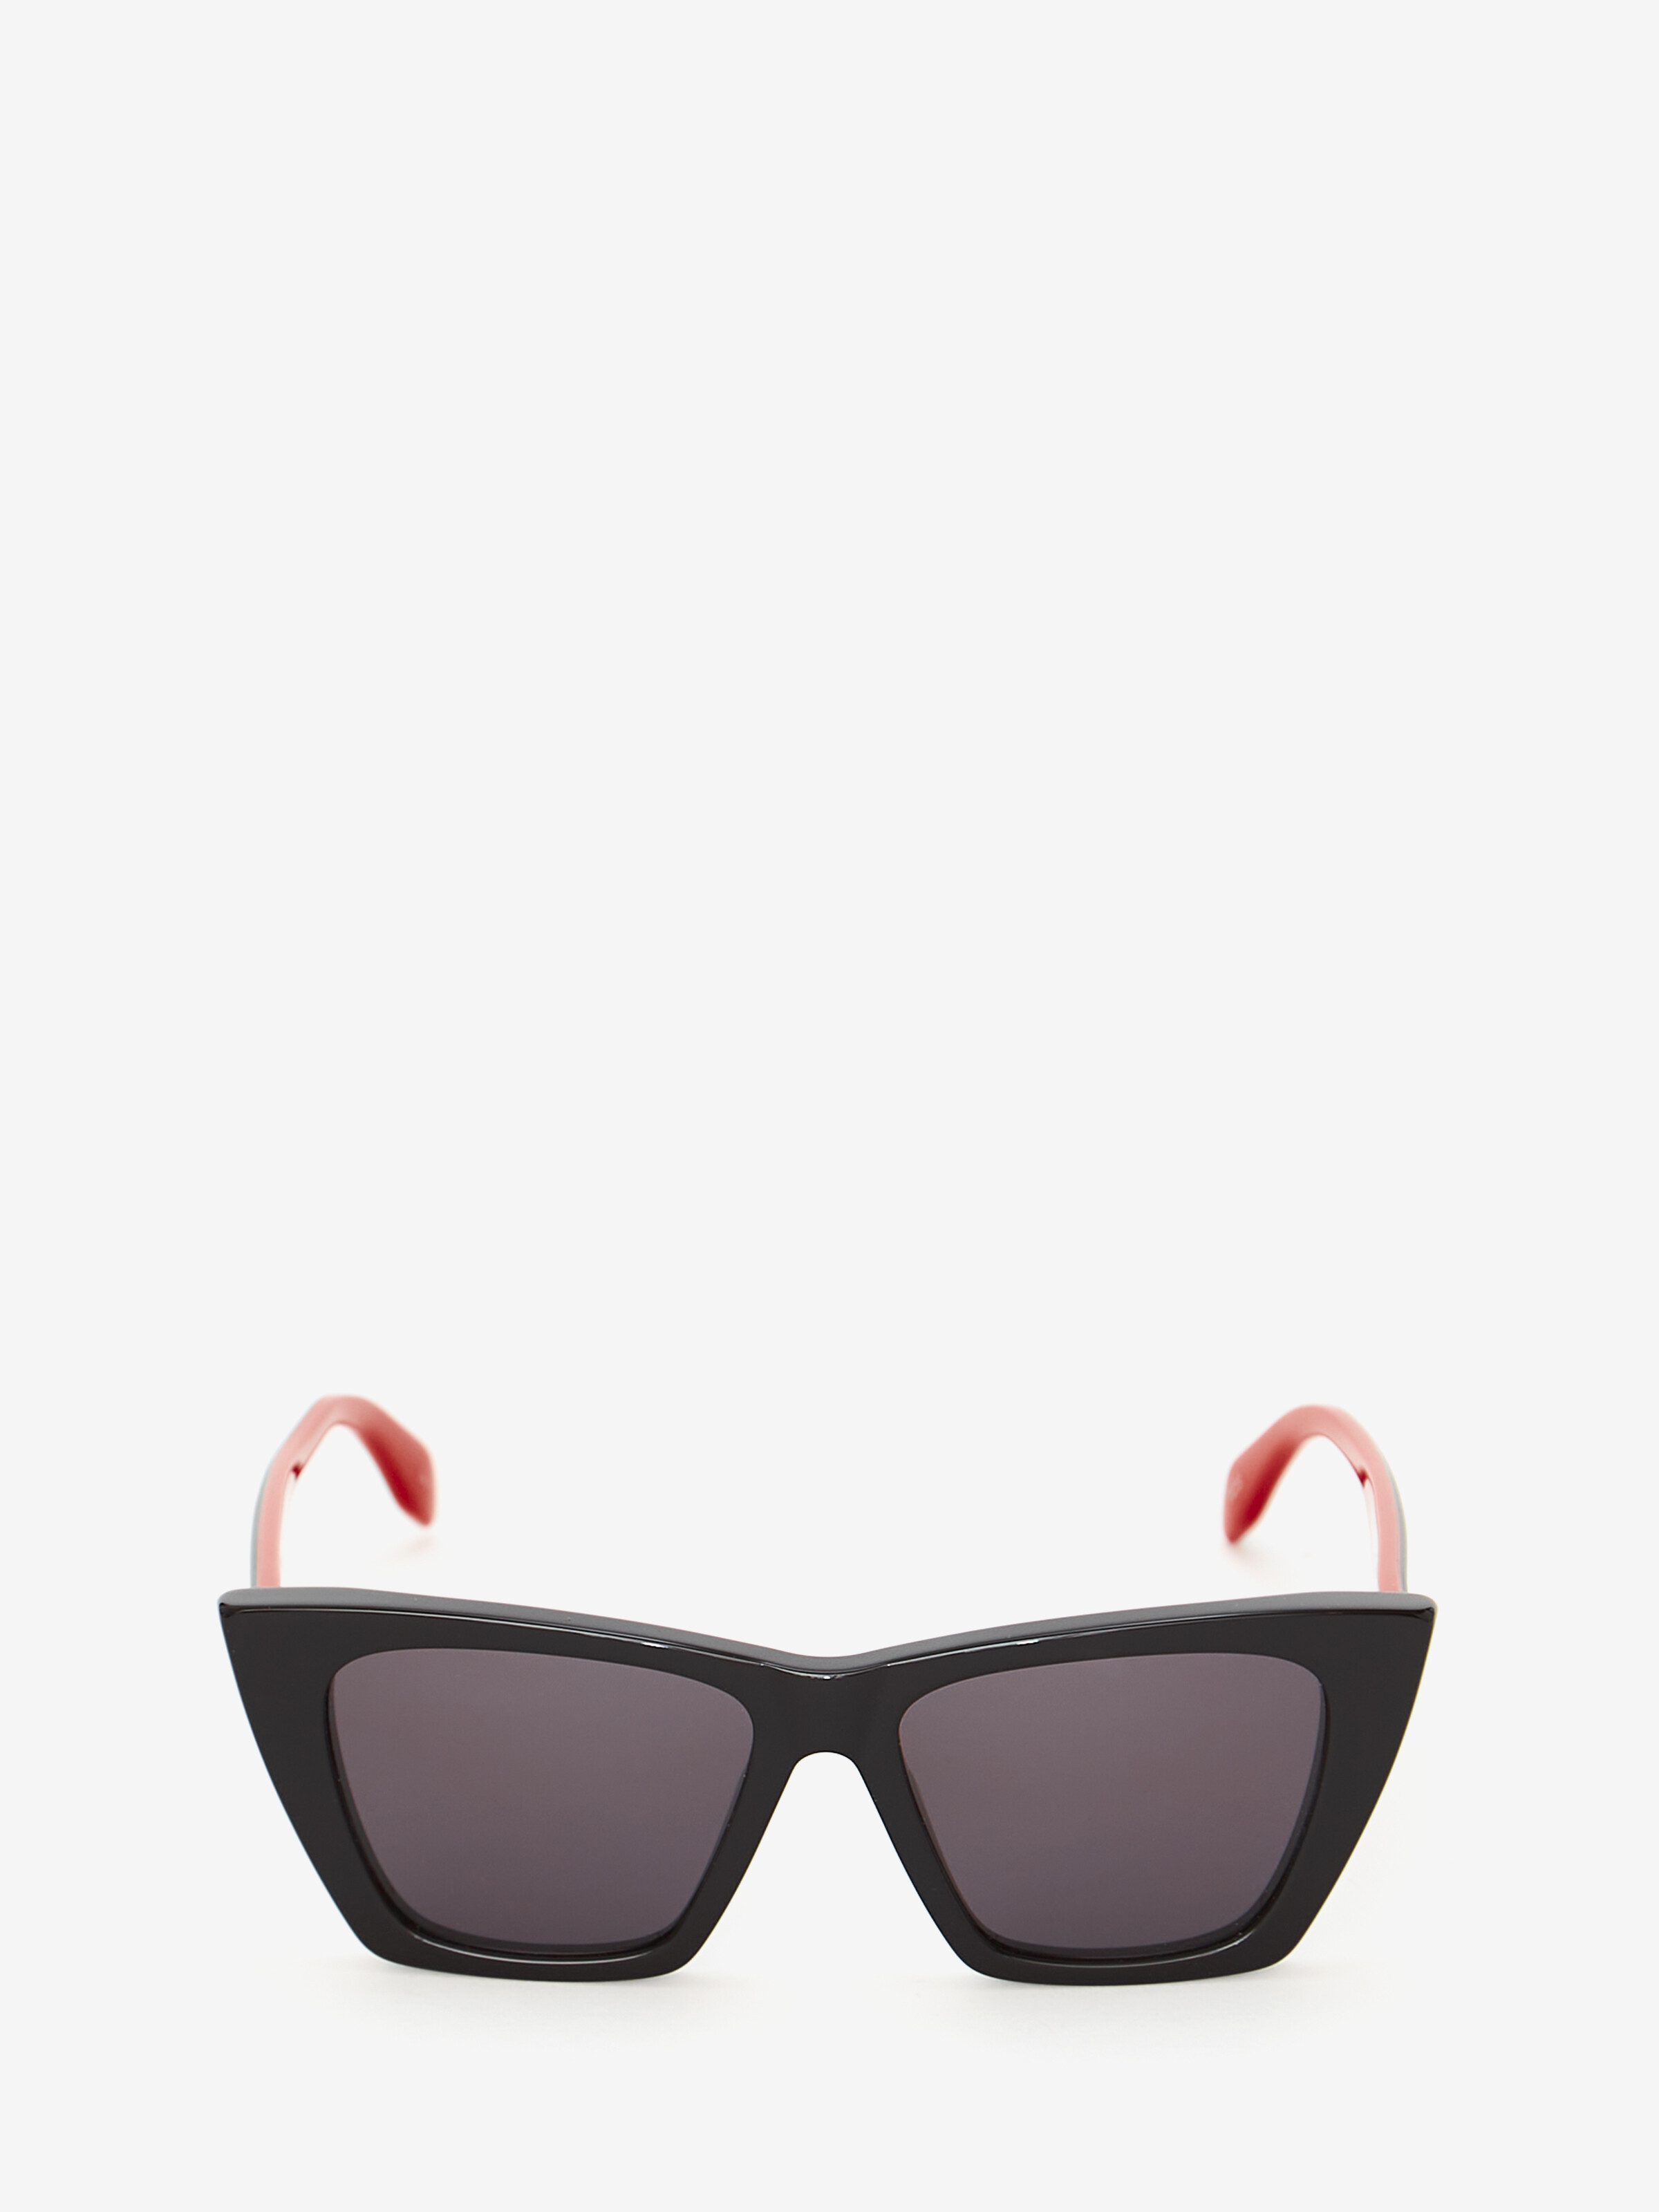 Alexander Mcqueen Selvedge Cat Eye Sunglasses In Black/red